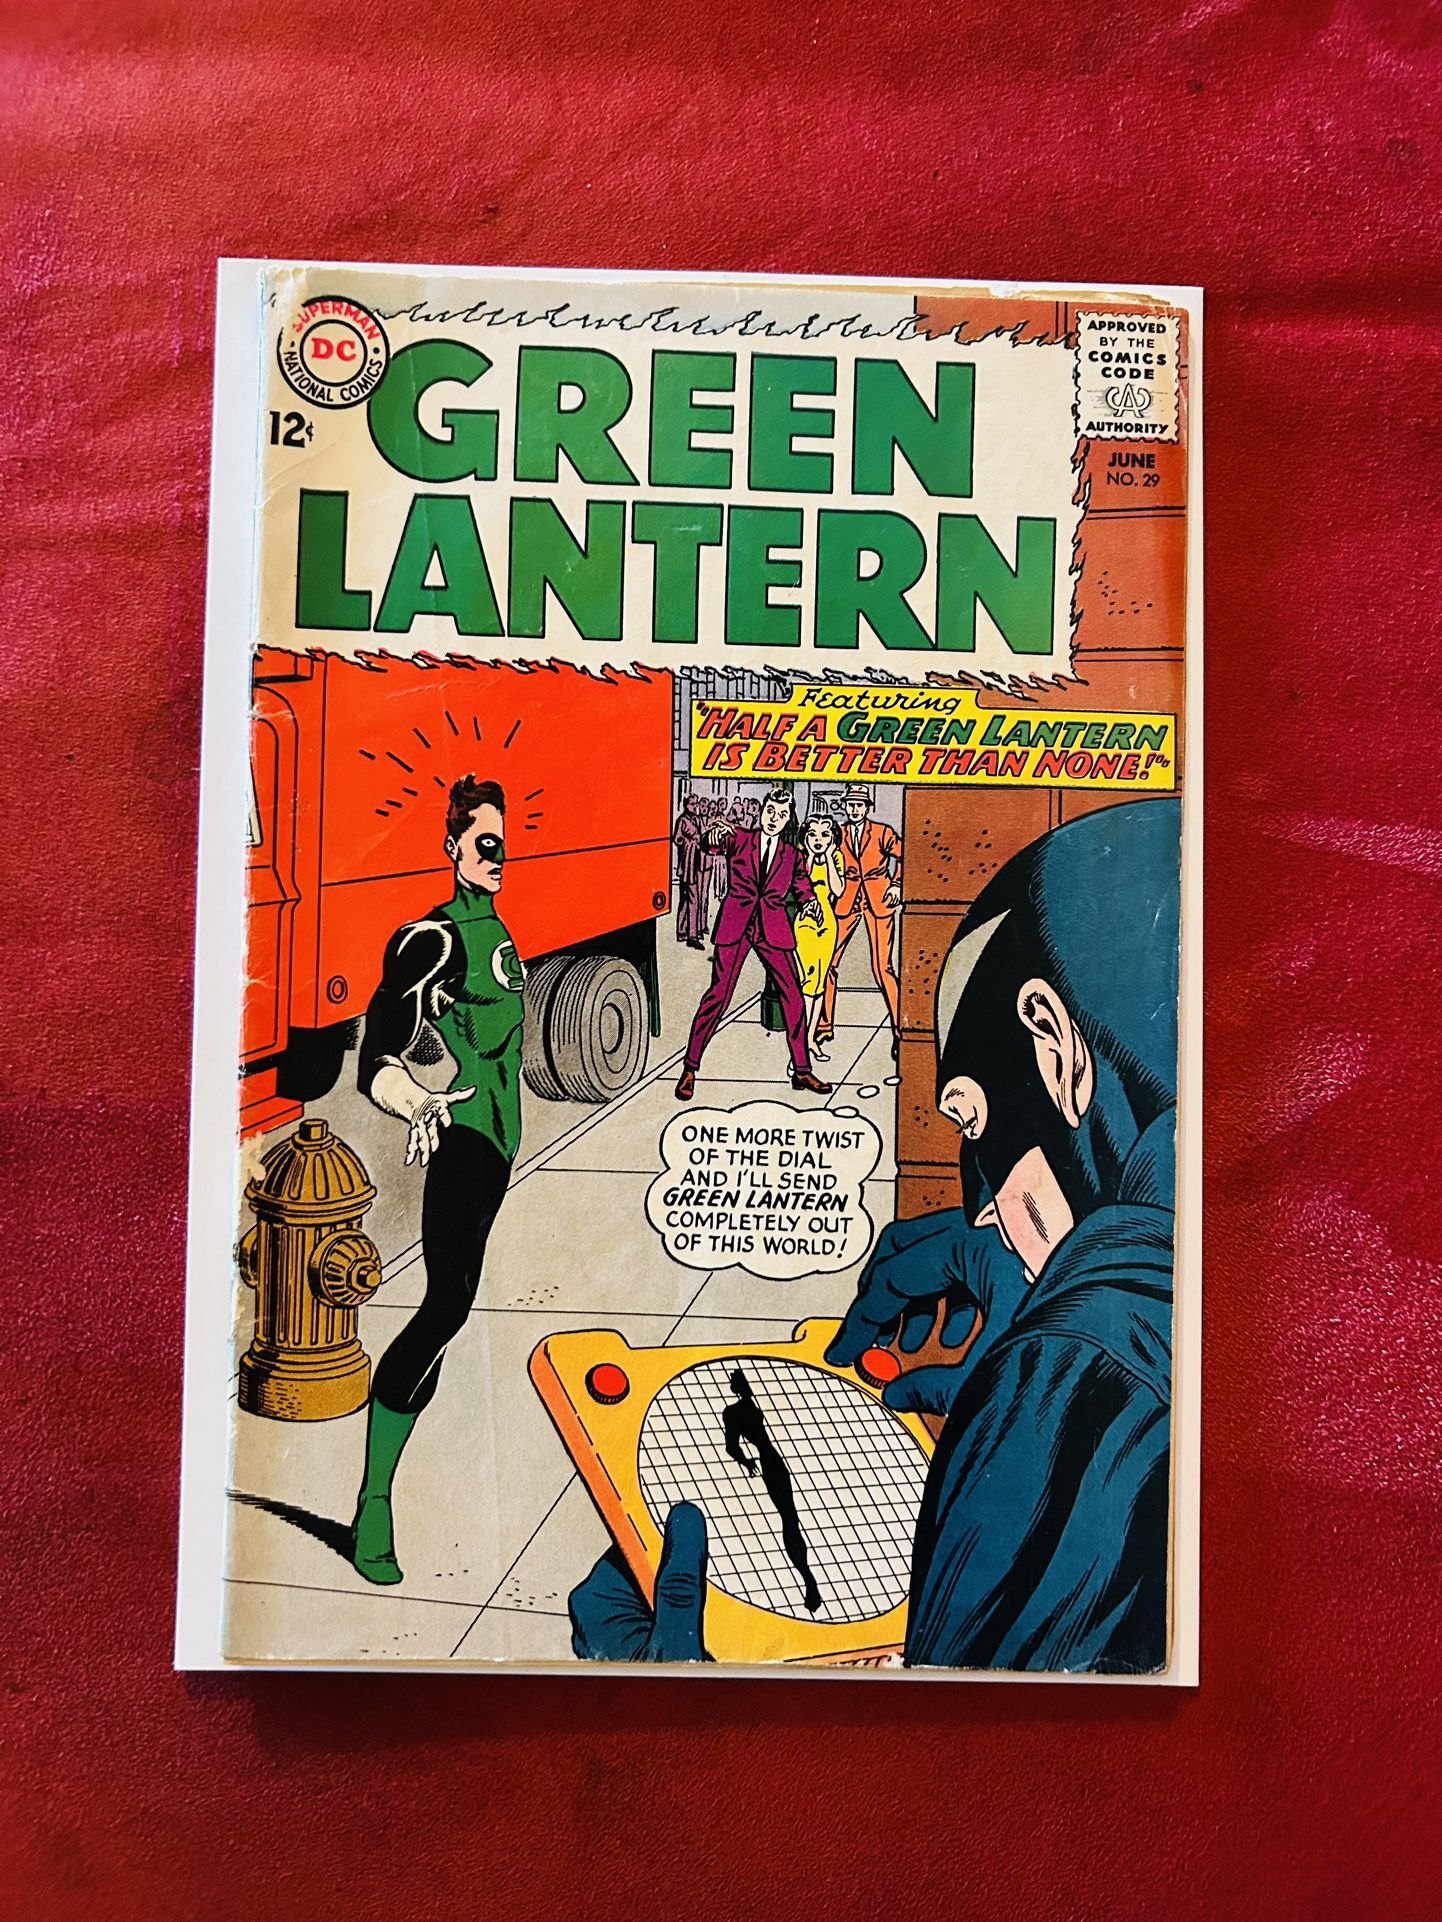 Green Lantern #29 - 1st Appearance of Black Hand (DC, 1964)